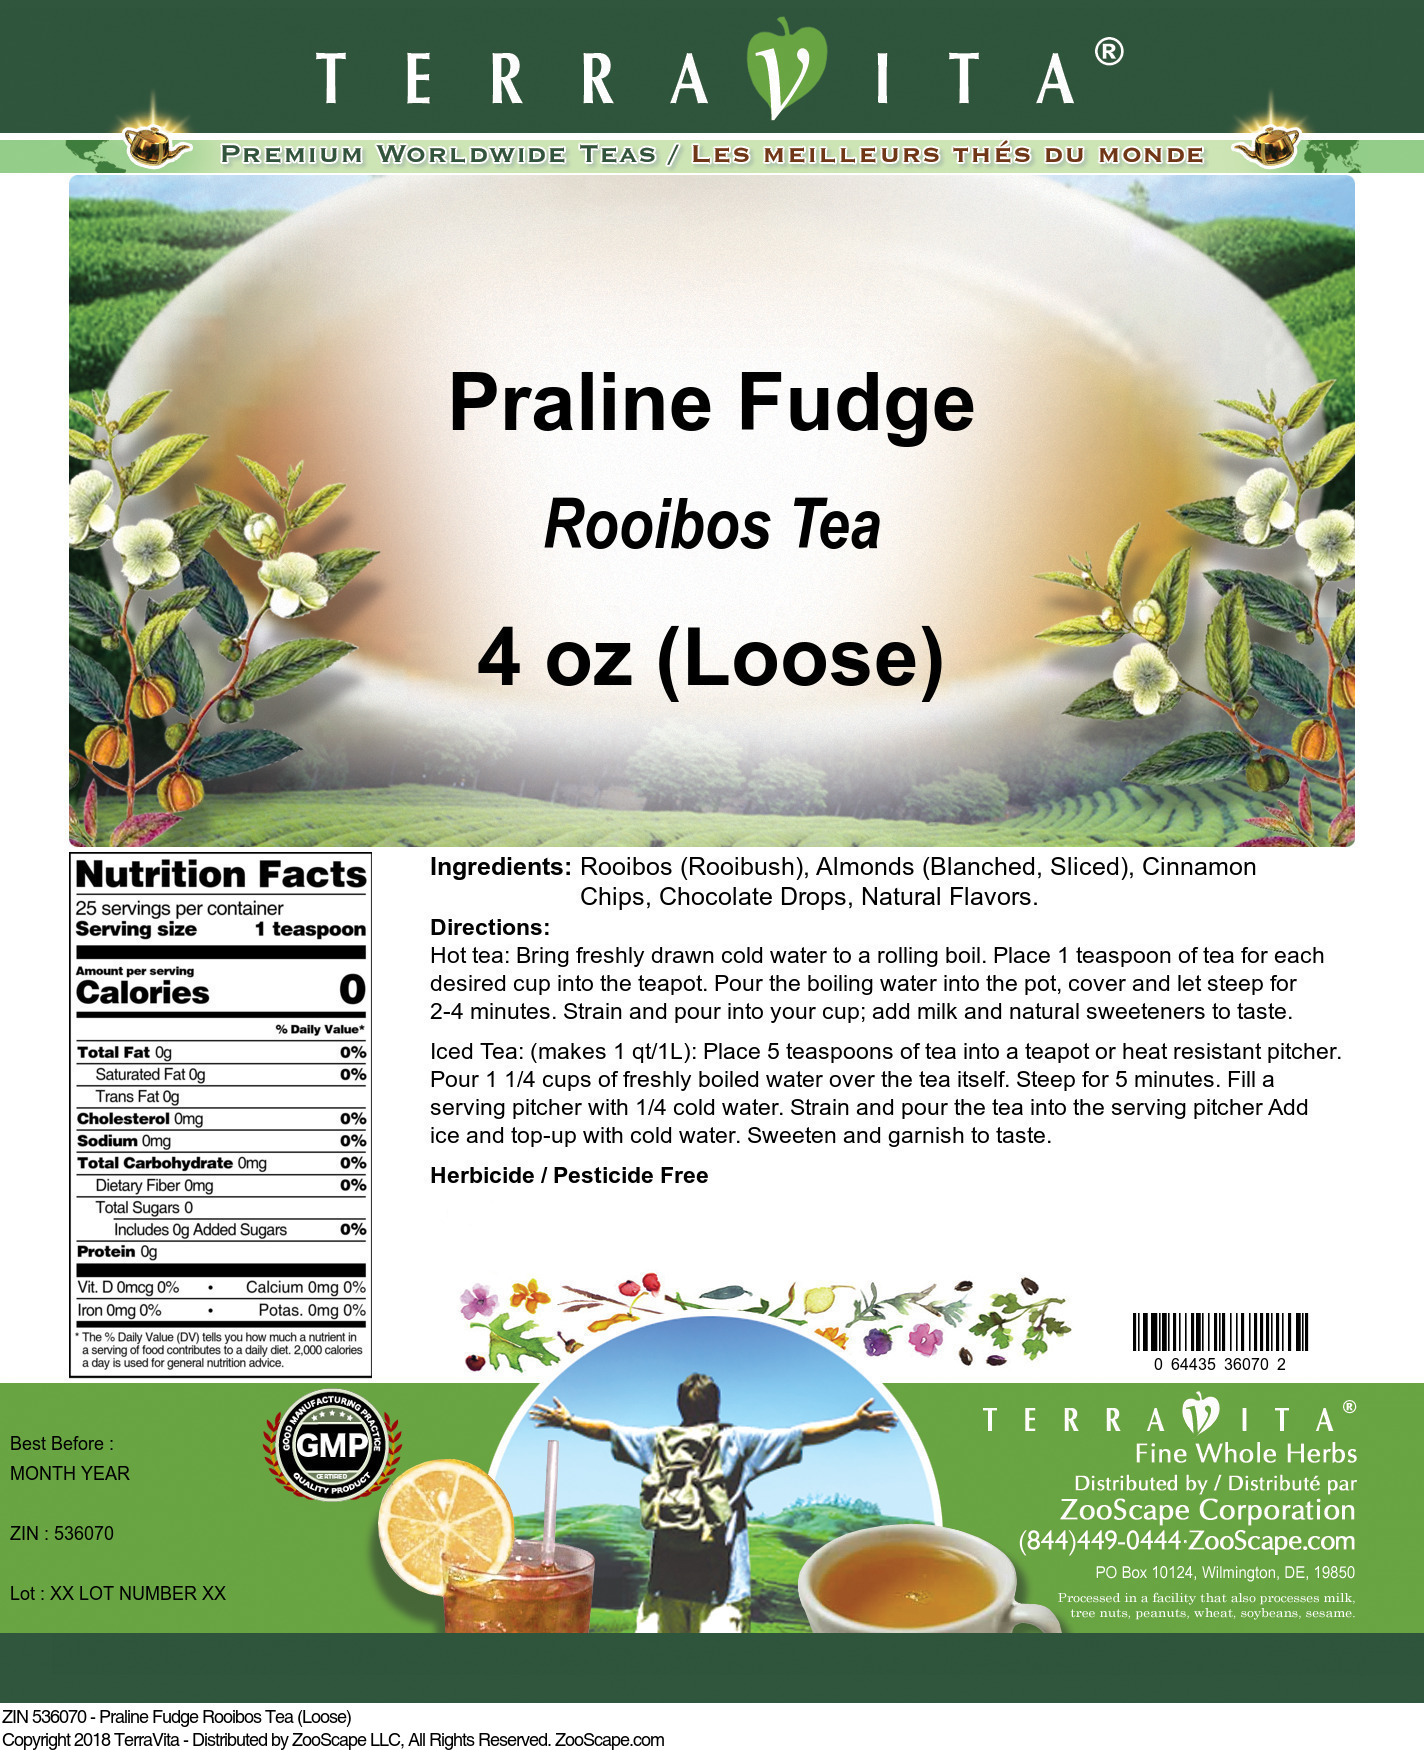 Praline Fudge Rooibos Tea (Loose) - Label